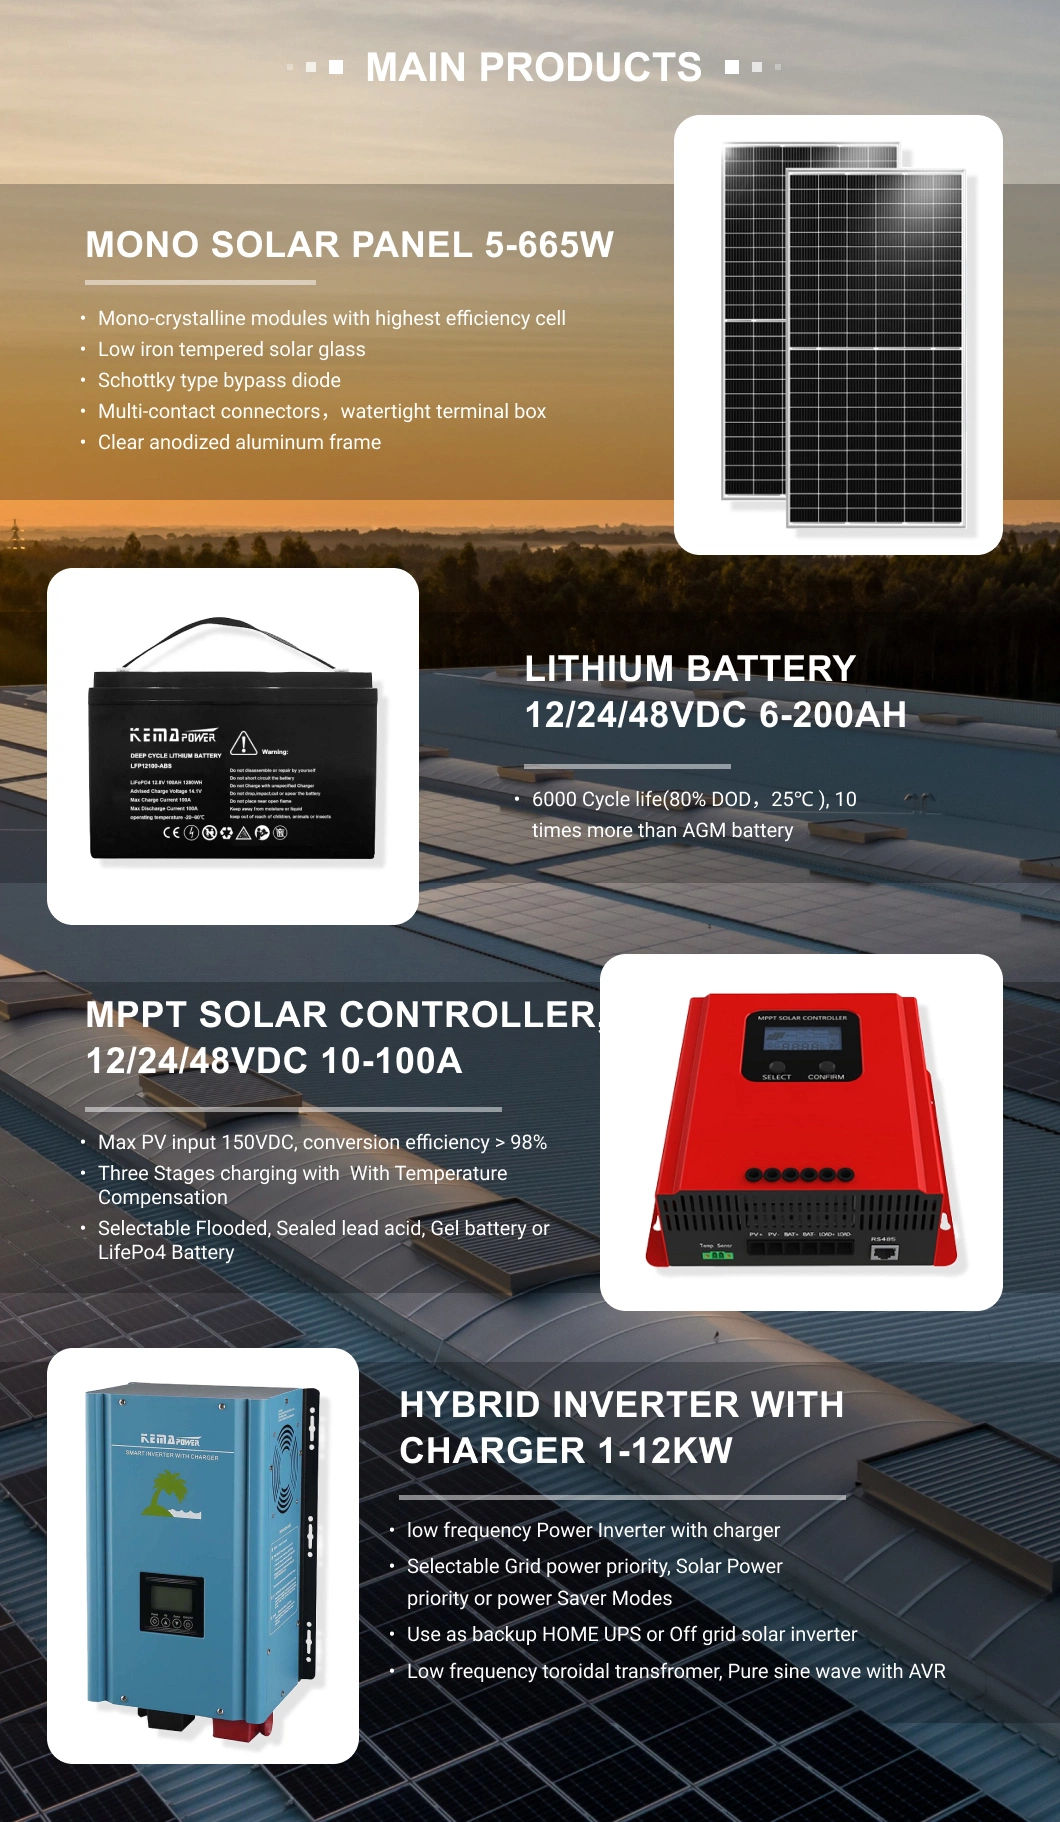 Kemapower Hybrid Solar Power Inverter MPPT DC to AC Converter 3 Phase